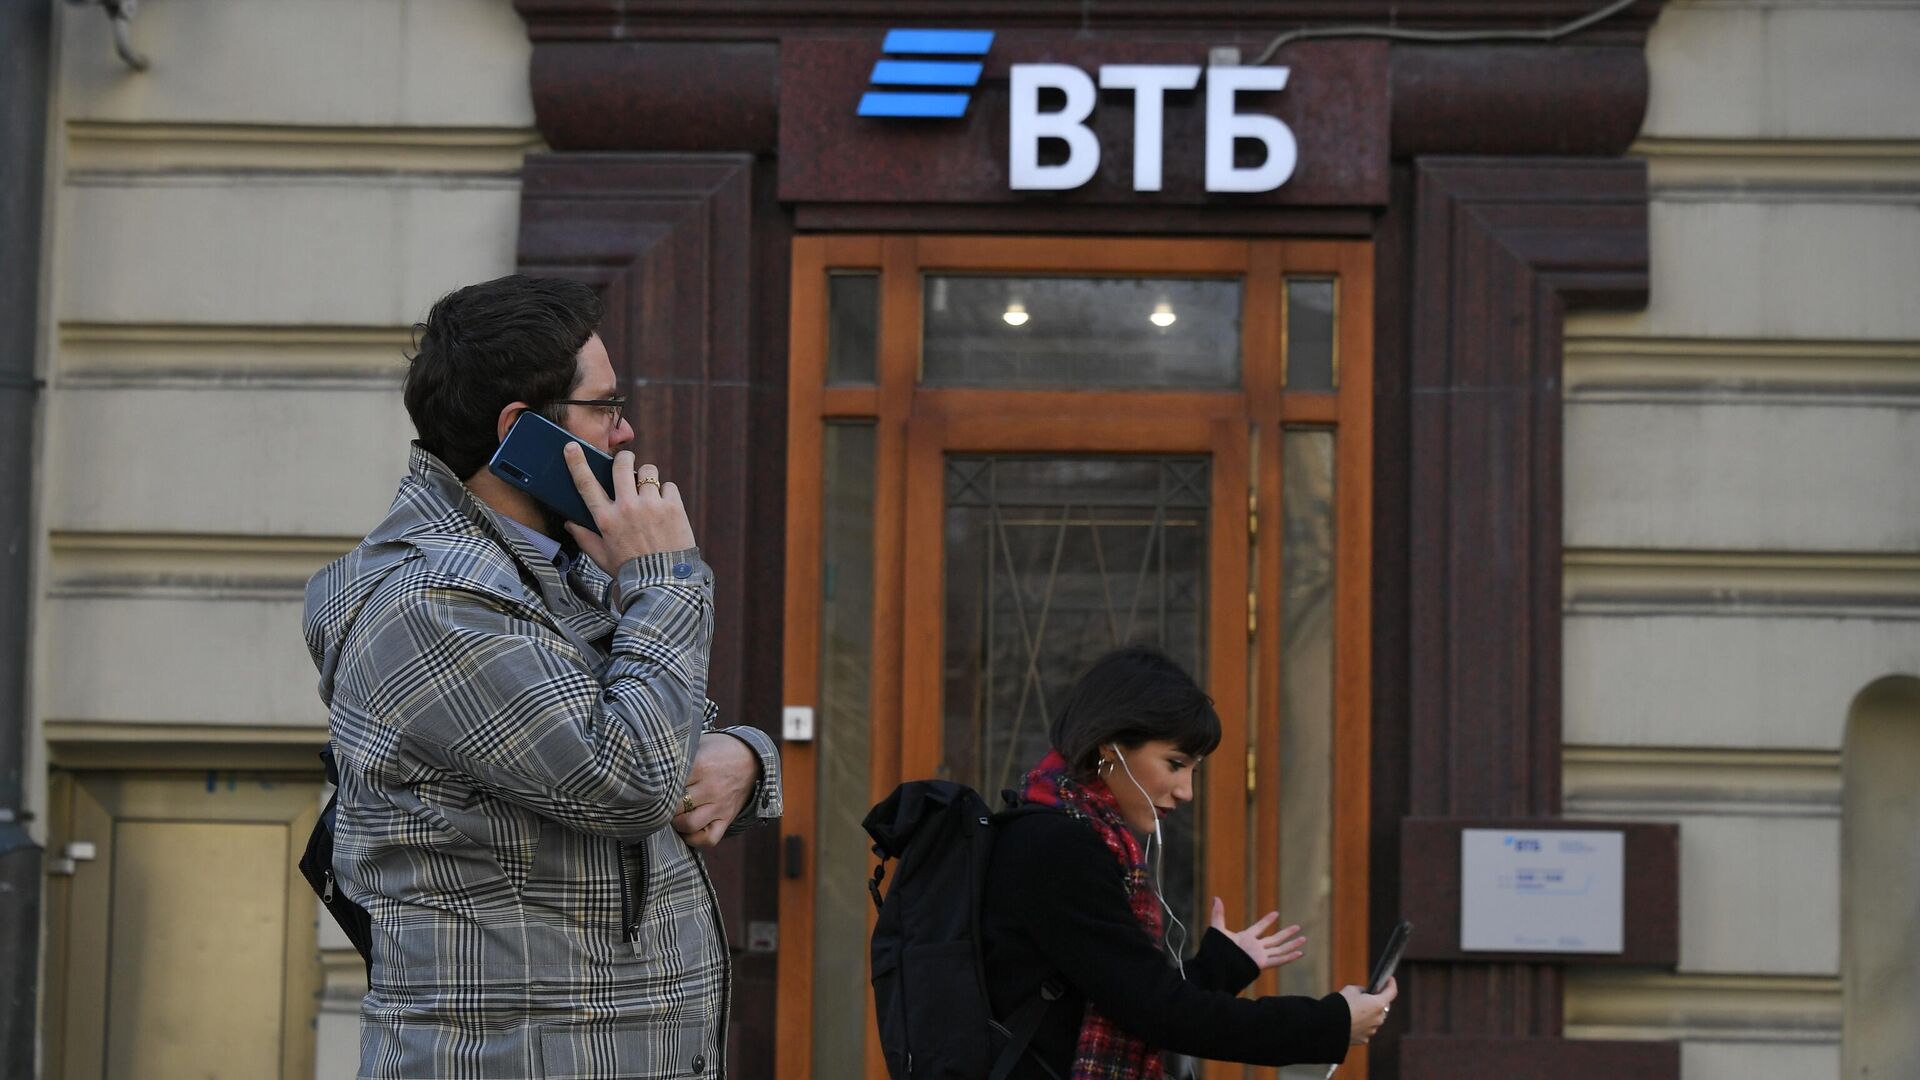 Втб дают деньги. ВТБ санкции. Банки России снаружи. Сотрудники банка ВТБ. Фото перед банком.